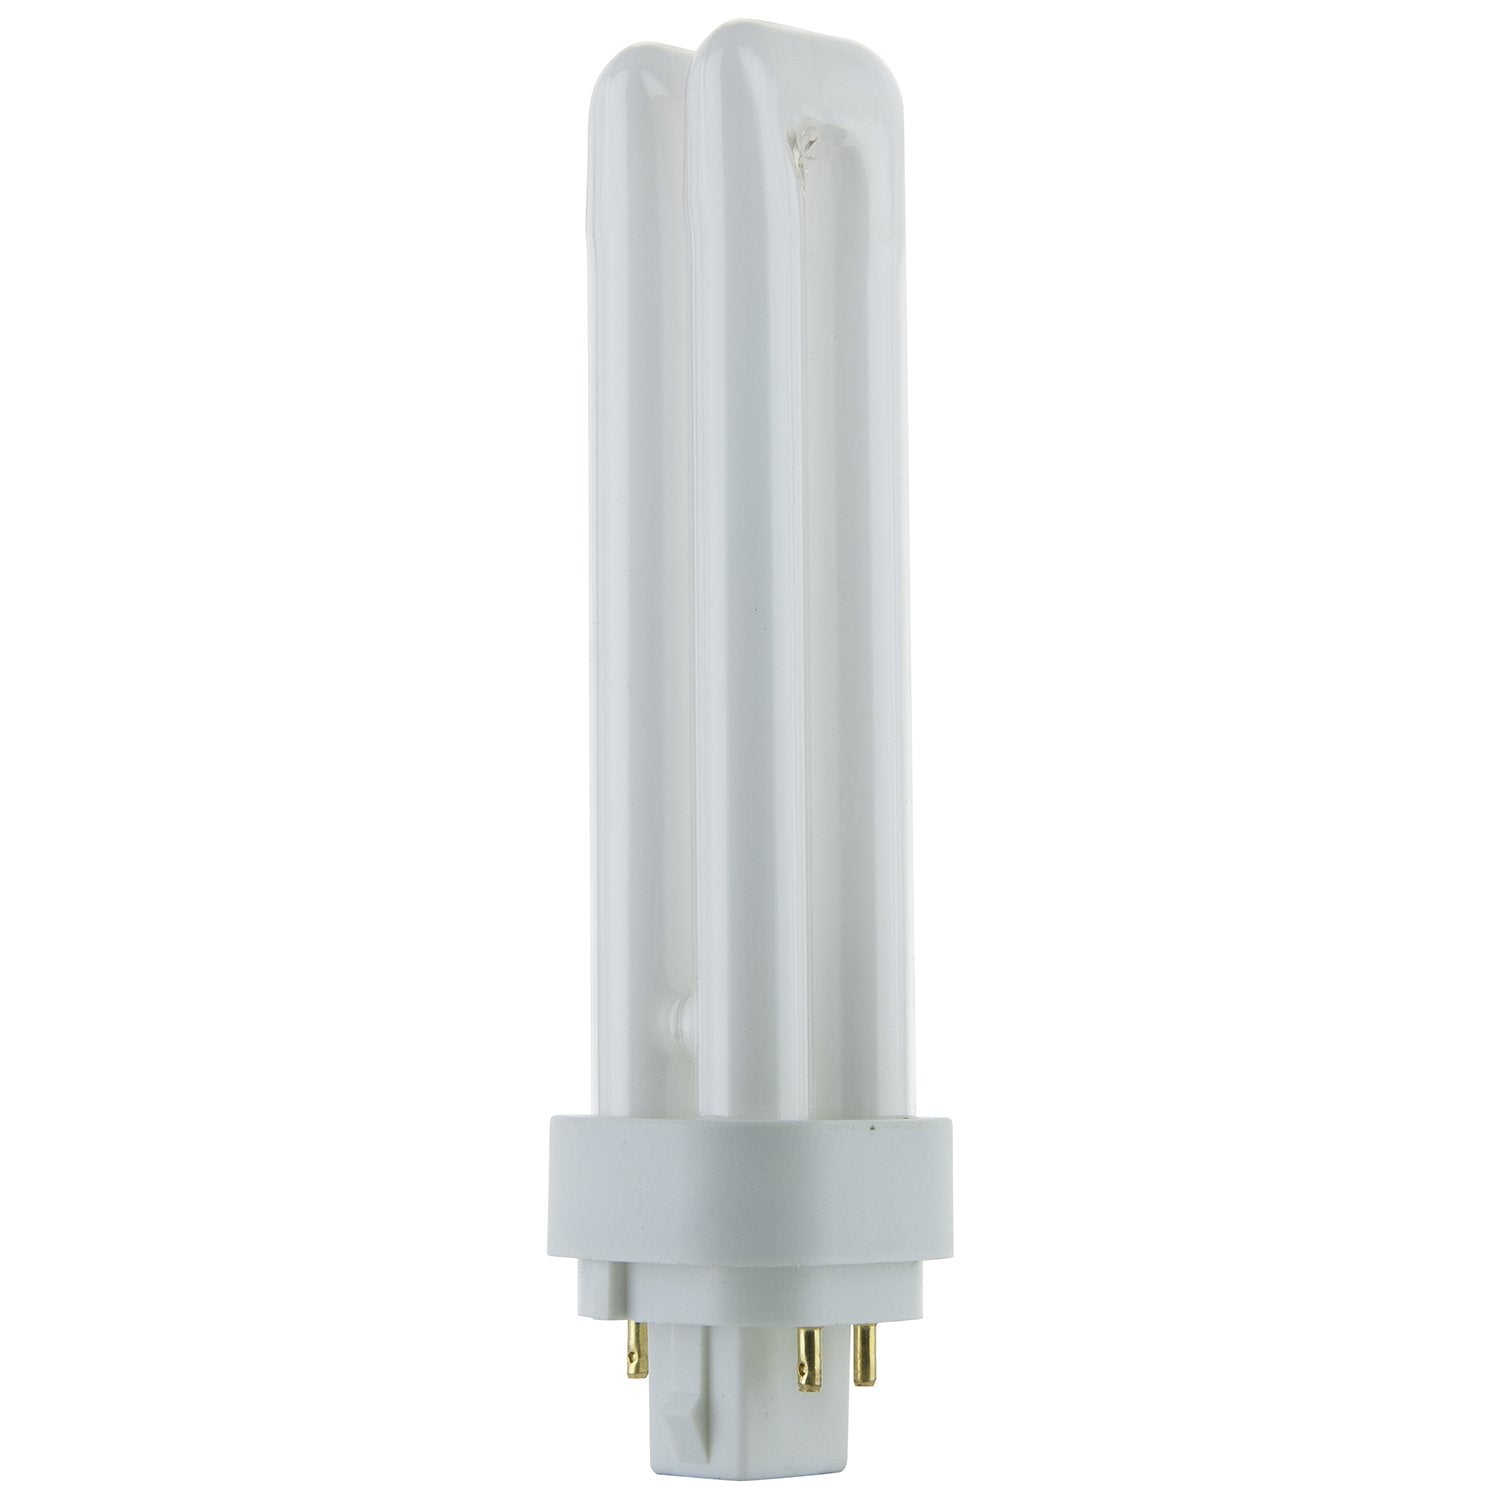 Sunlite PLD18/E/SP27K 18-Watt Compact Fluorescent Plug-In 4-Pin Light Bulb, 2700K Color  - Good